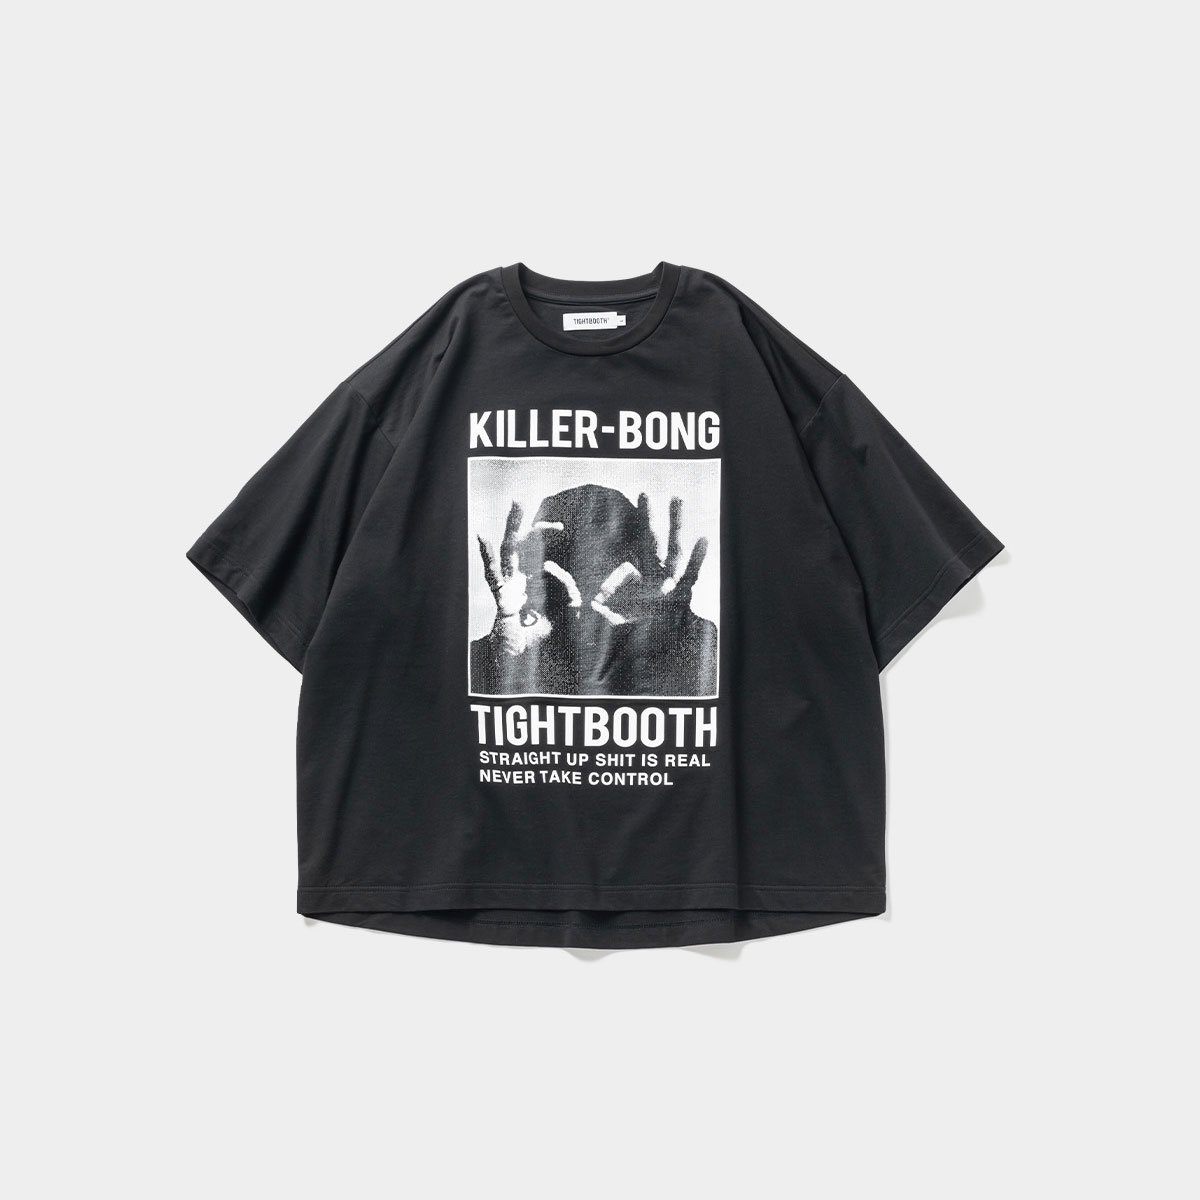 TIGHTBOOTH / KILLER BONG - HAND SIGN T-SHIRT - SHRED